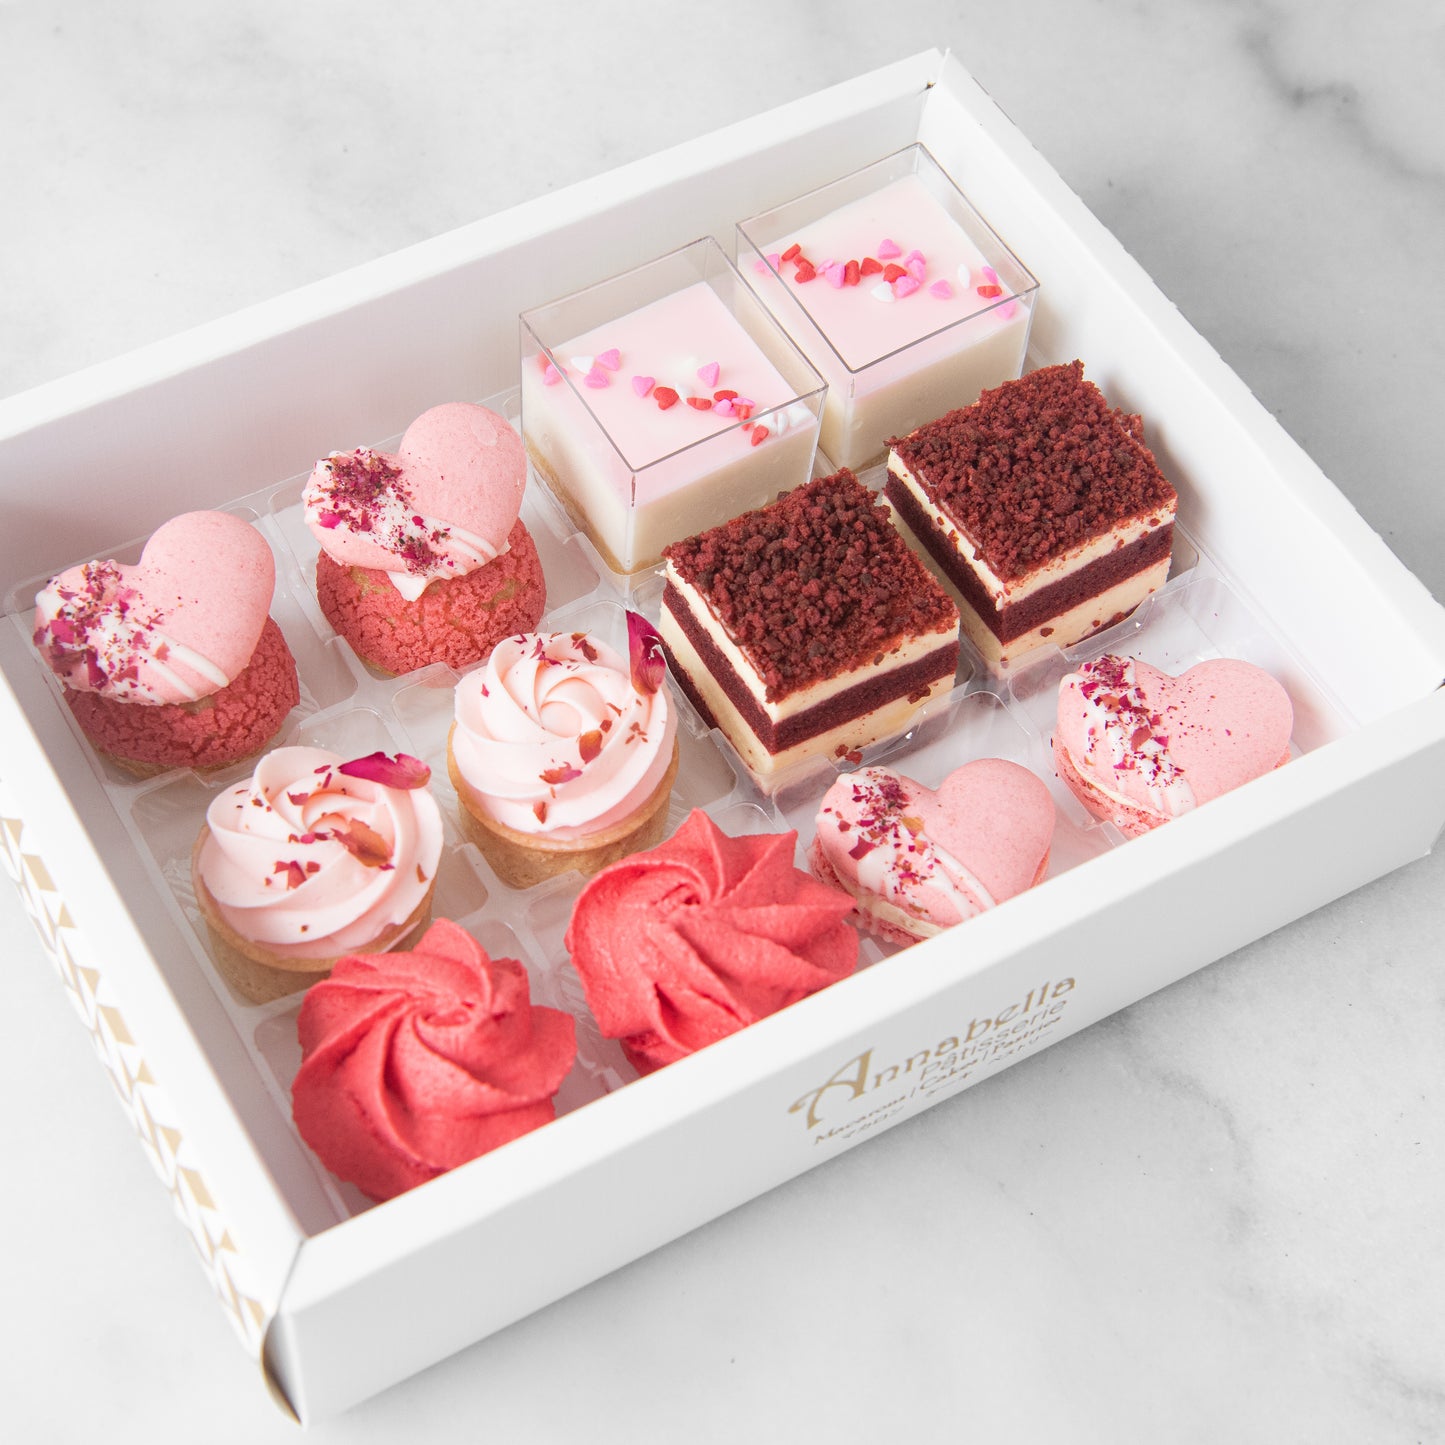 Happy Mom's Day | 12in1 Bliss Dessert Box | $39.90 Nett